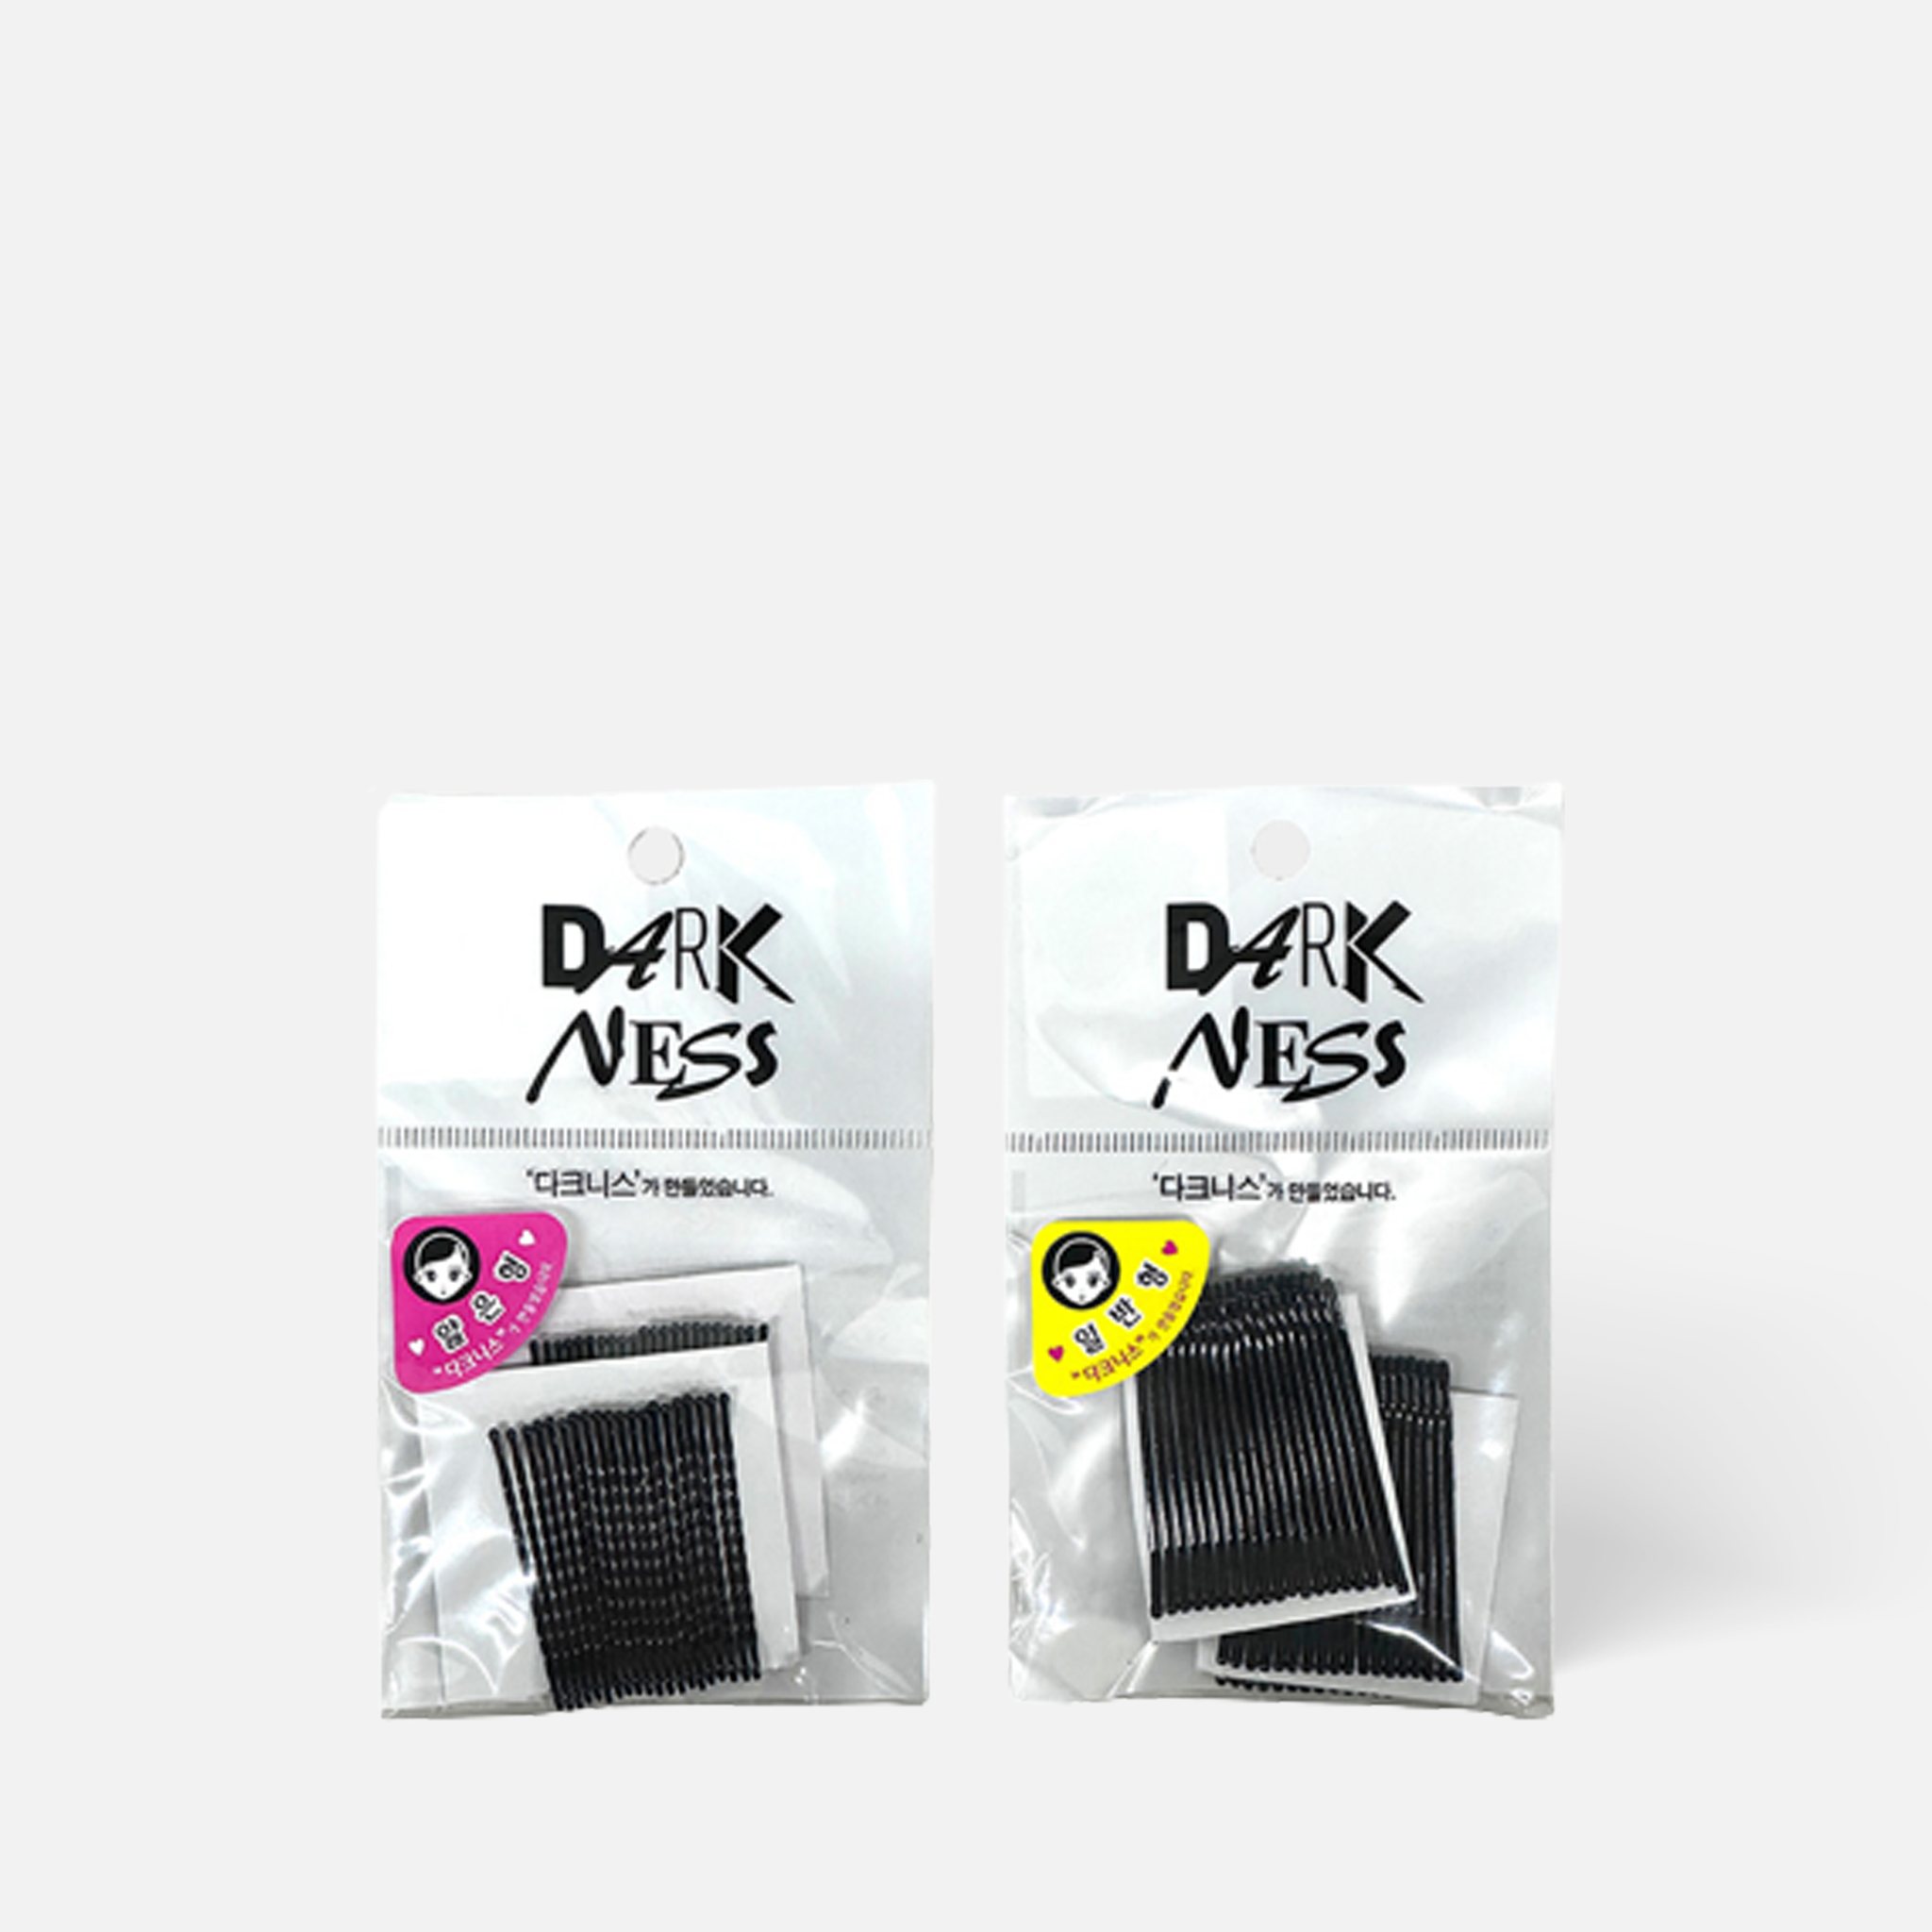 Darkness Hair Pins Kit 1set